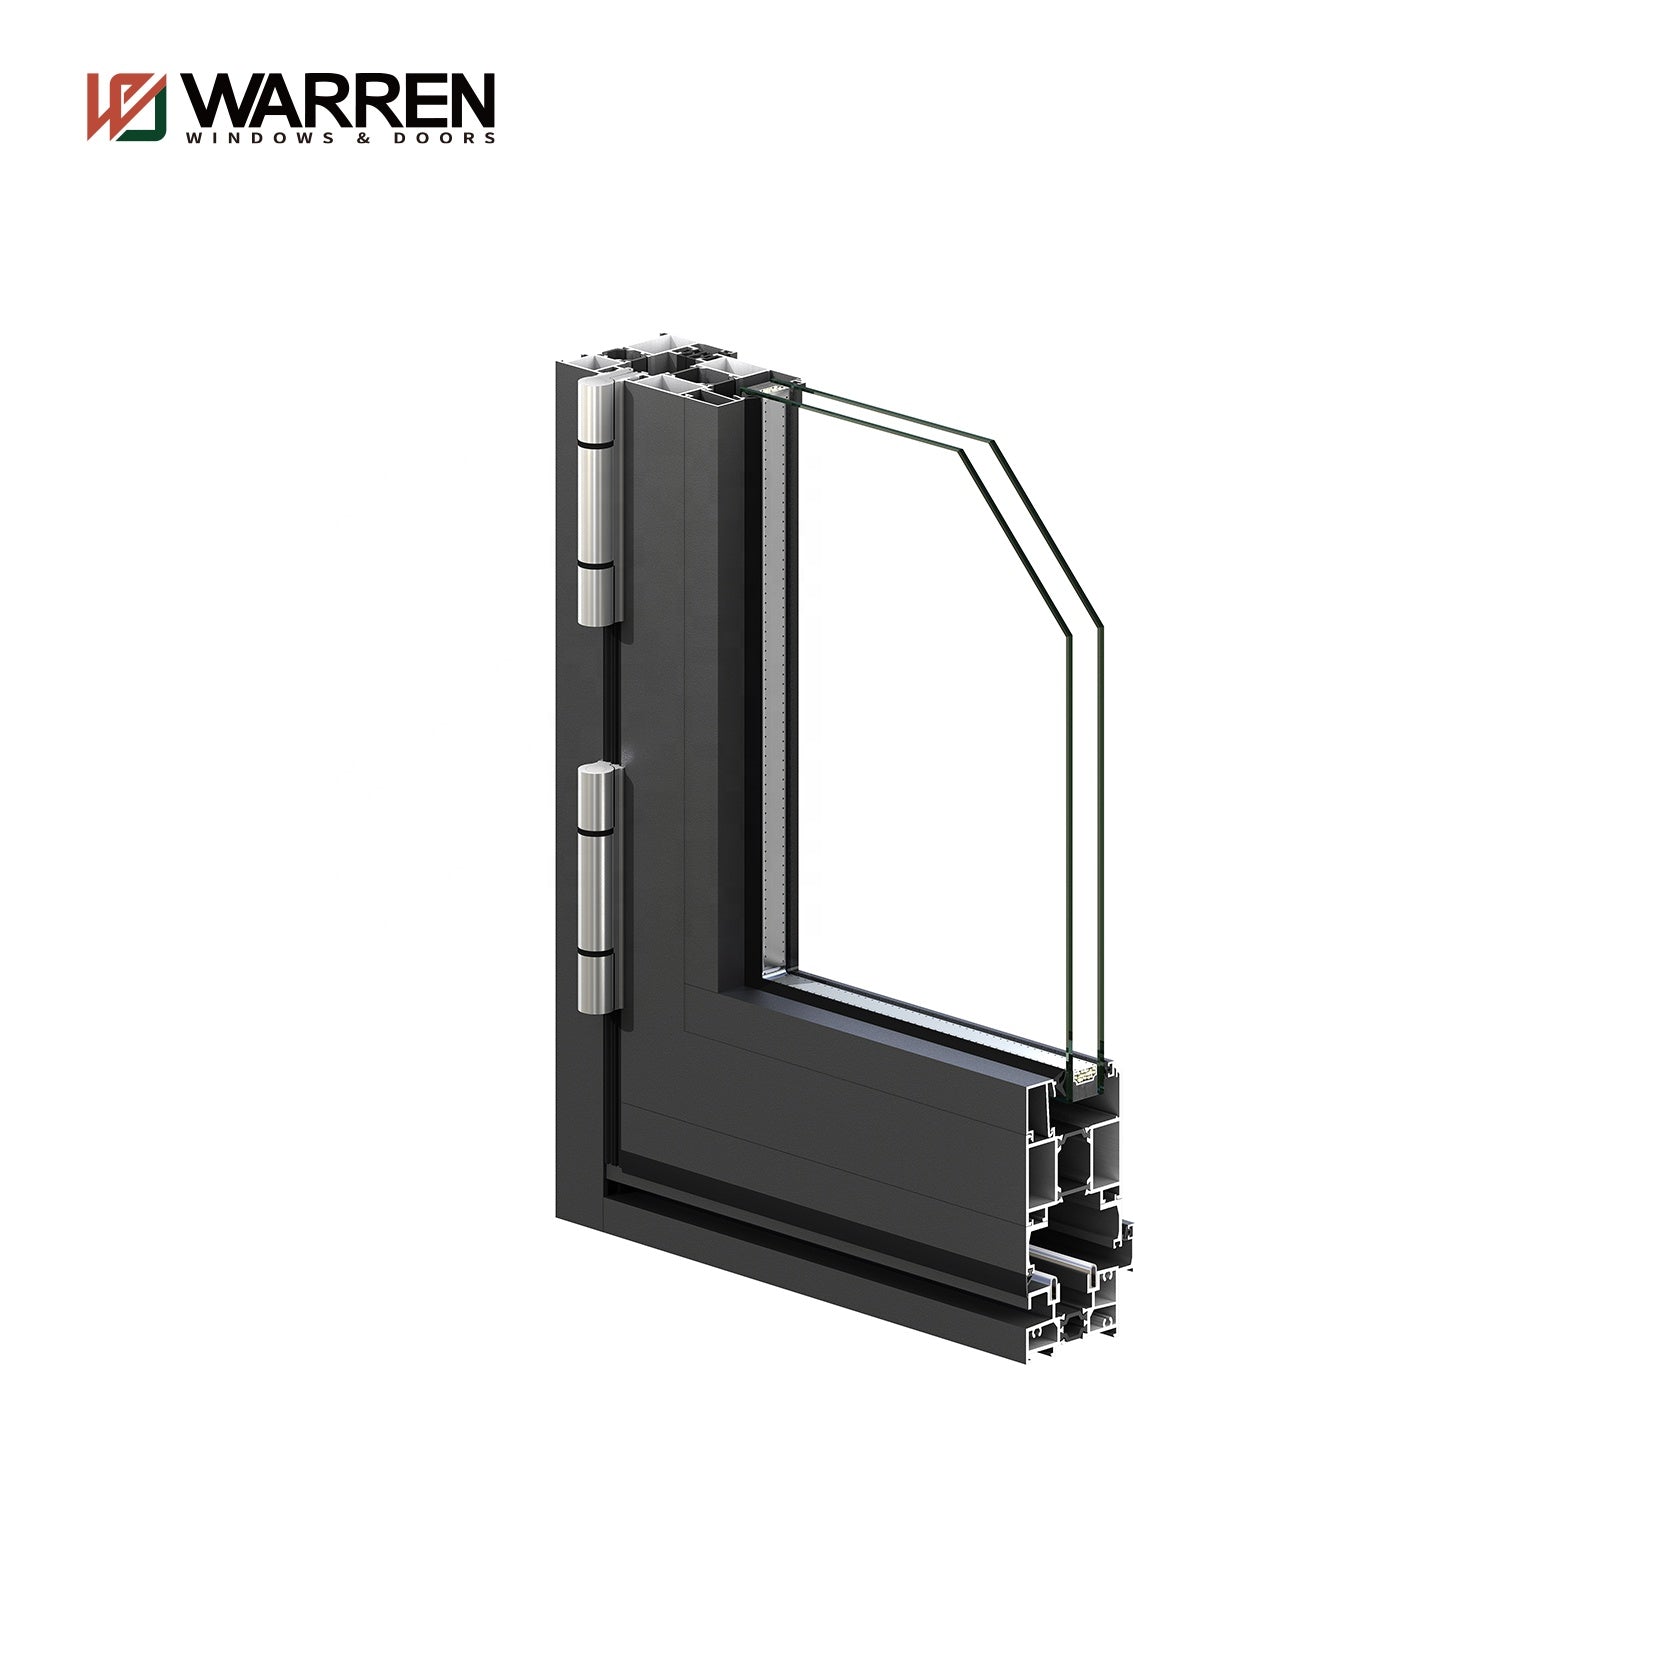 Warren hot sale folding door Glass Entrance Big View Floor To Ceiling Aluminum Windows Narrow Aluminium Black Bi Fold Folding